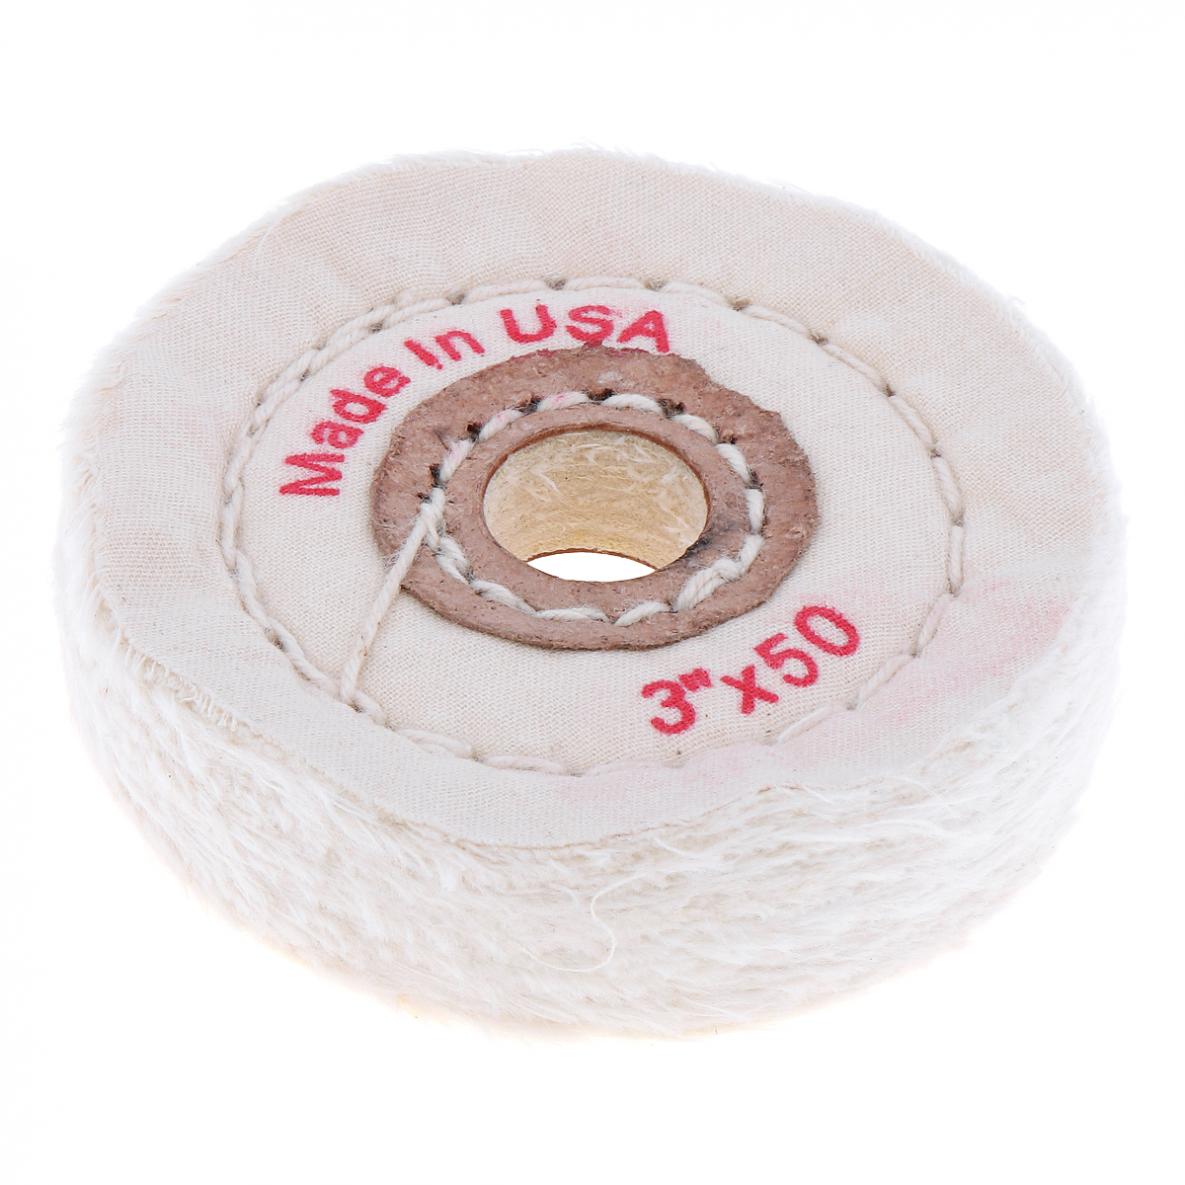 3 Inch T-shaped White Cotton Cloth Polishing Wheel Flannel Mirror Polishing Buffer Cotton Pad with 10mm Hole for Metal Polishing